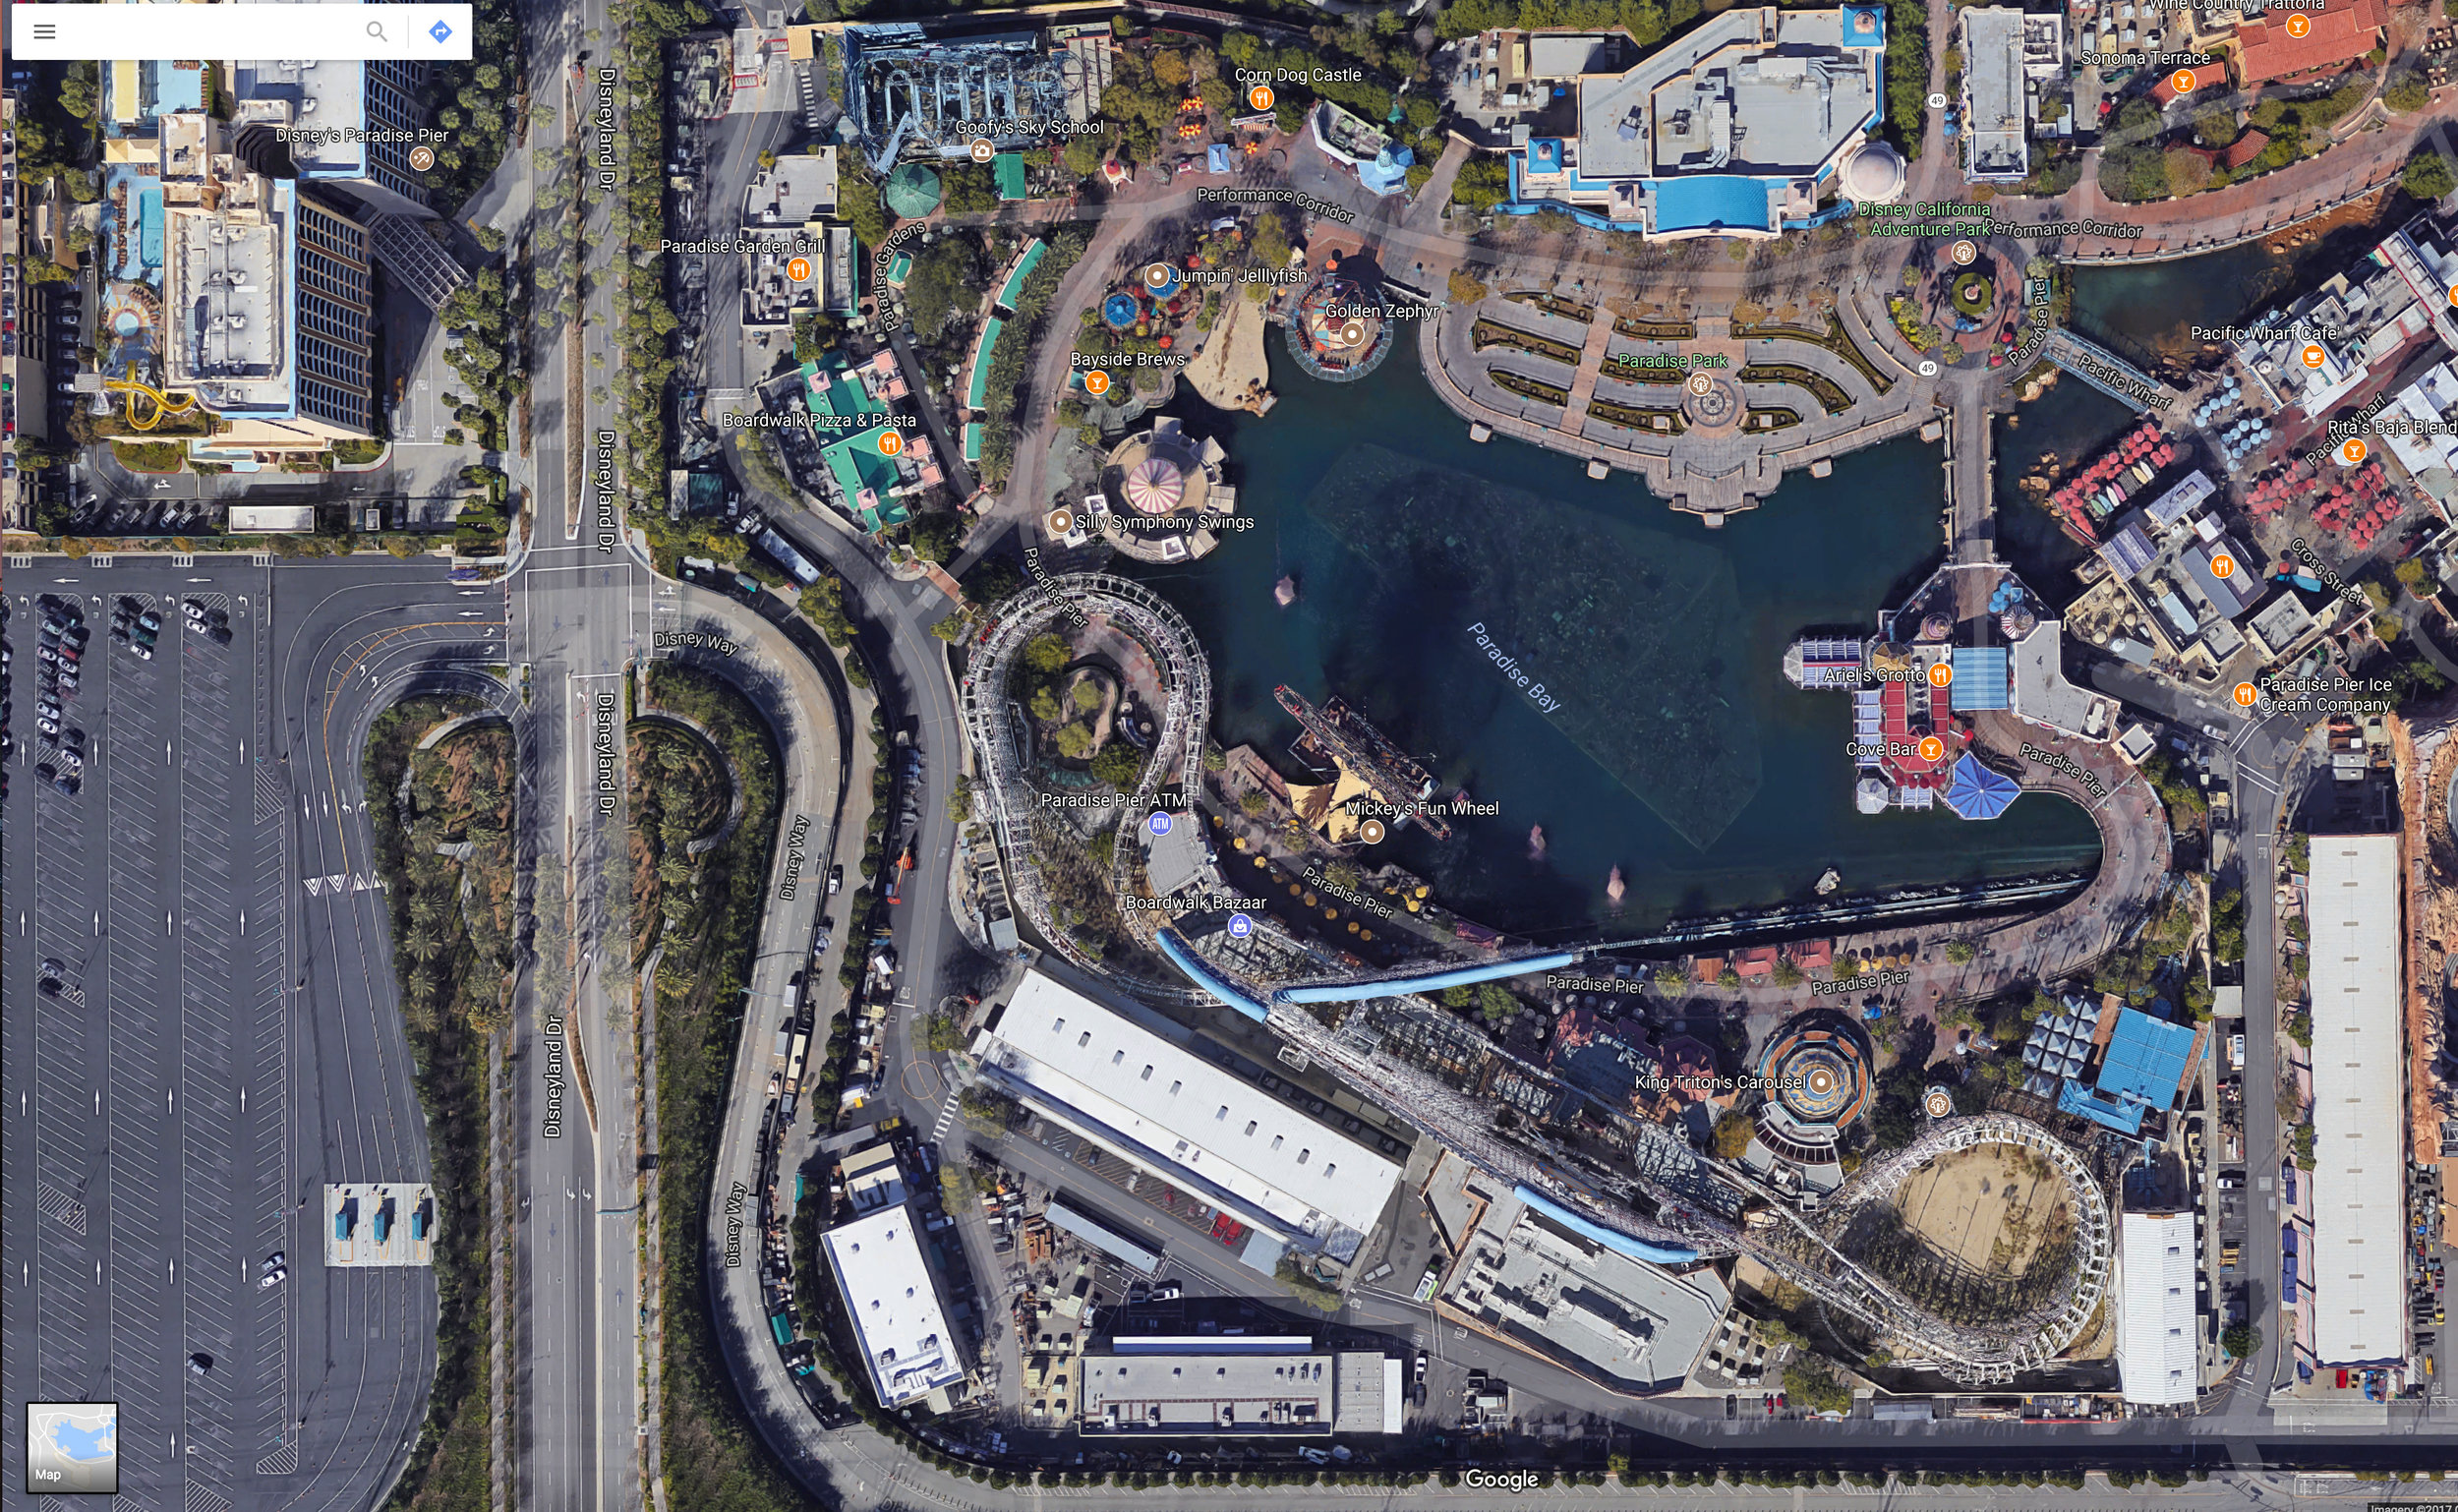  Satellite view of Pixar Pier 